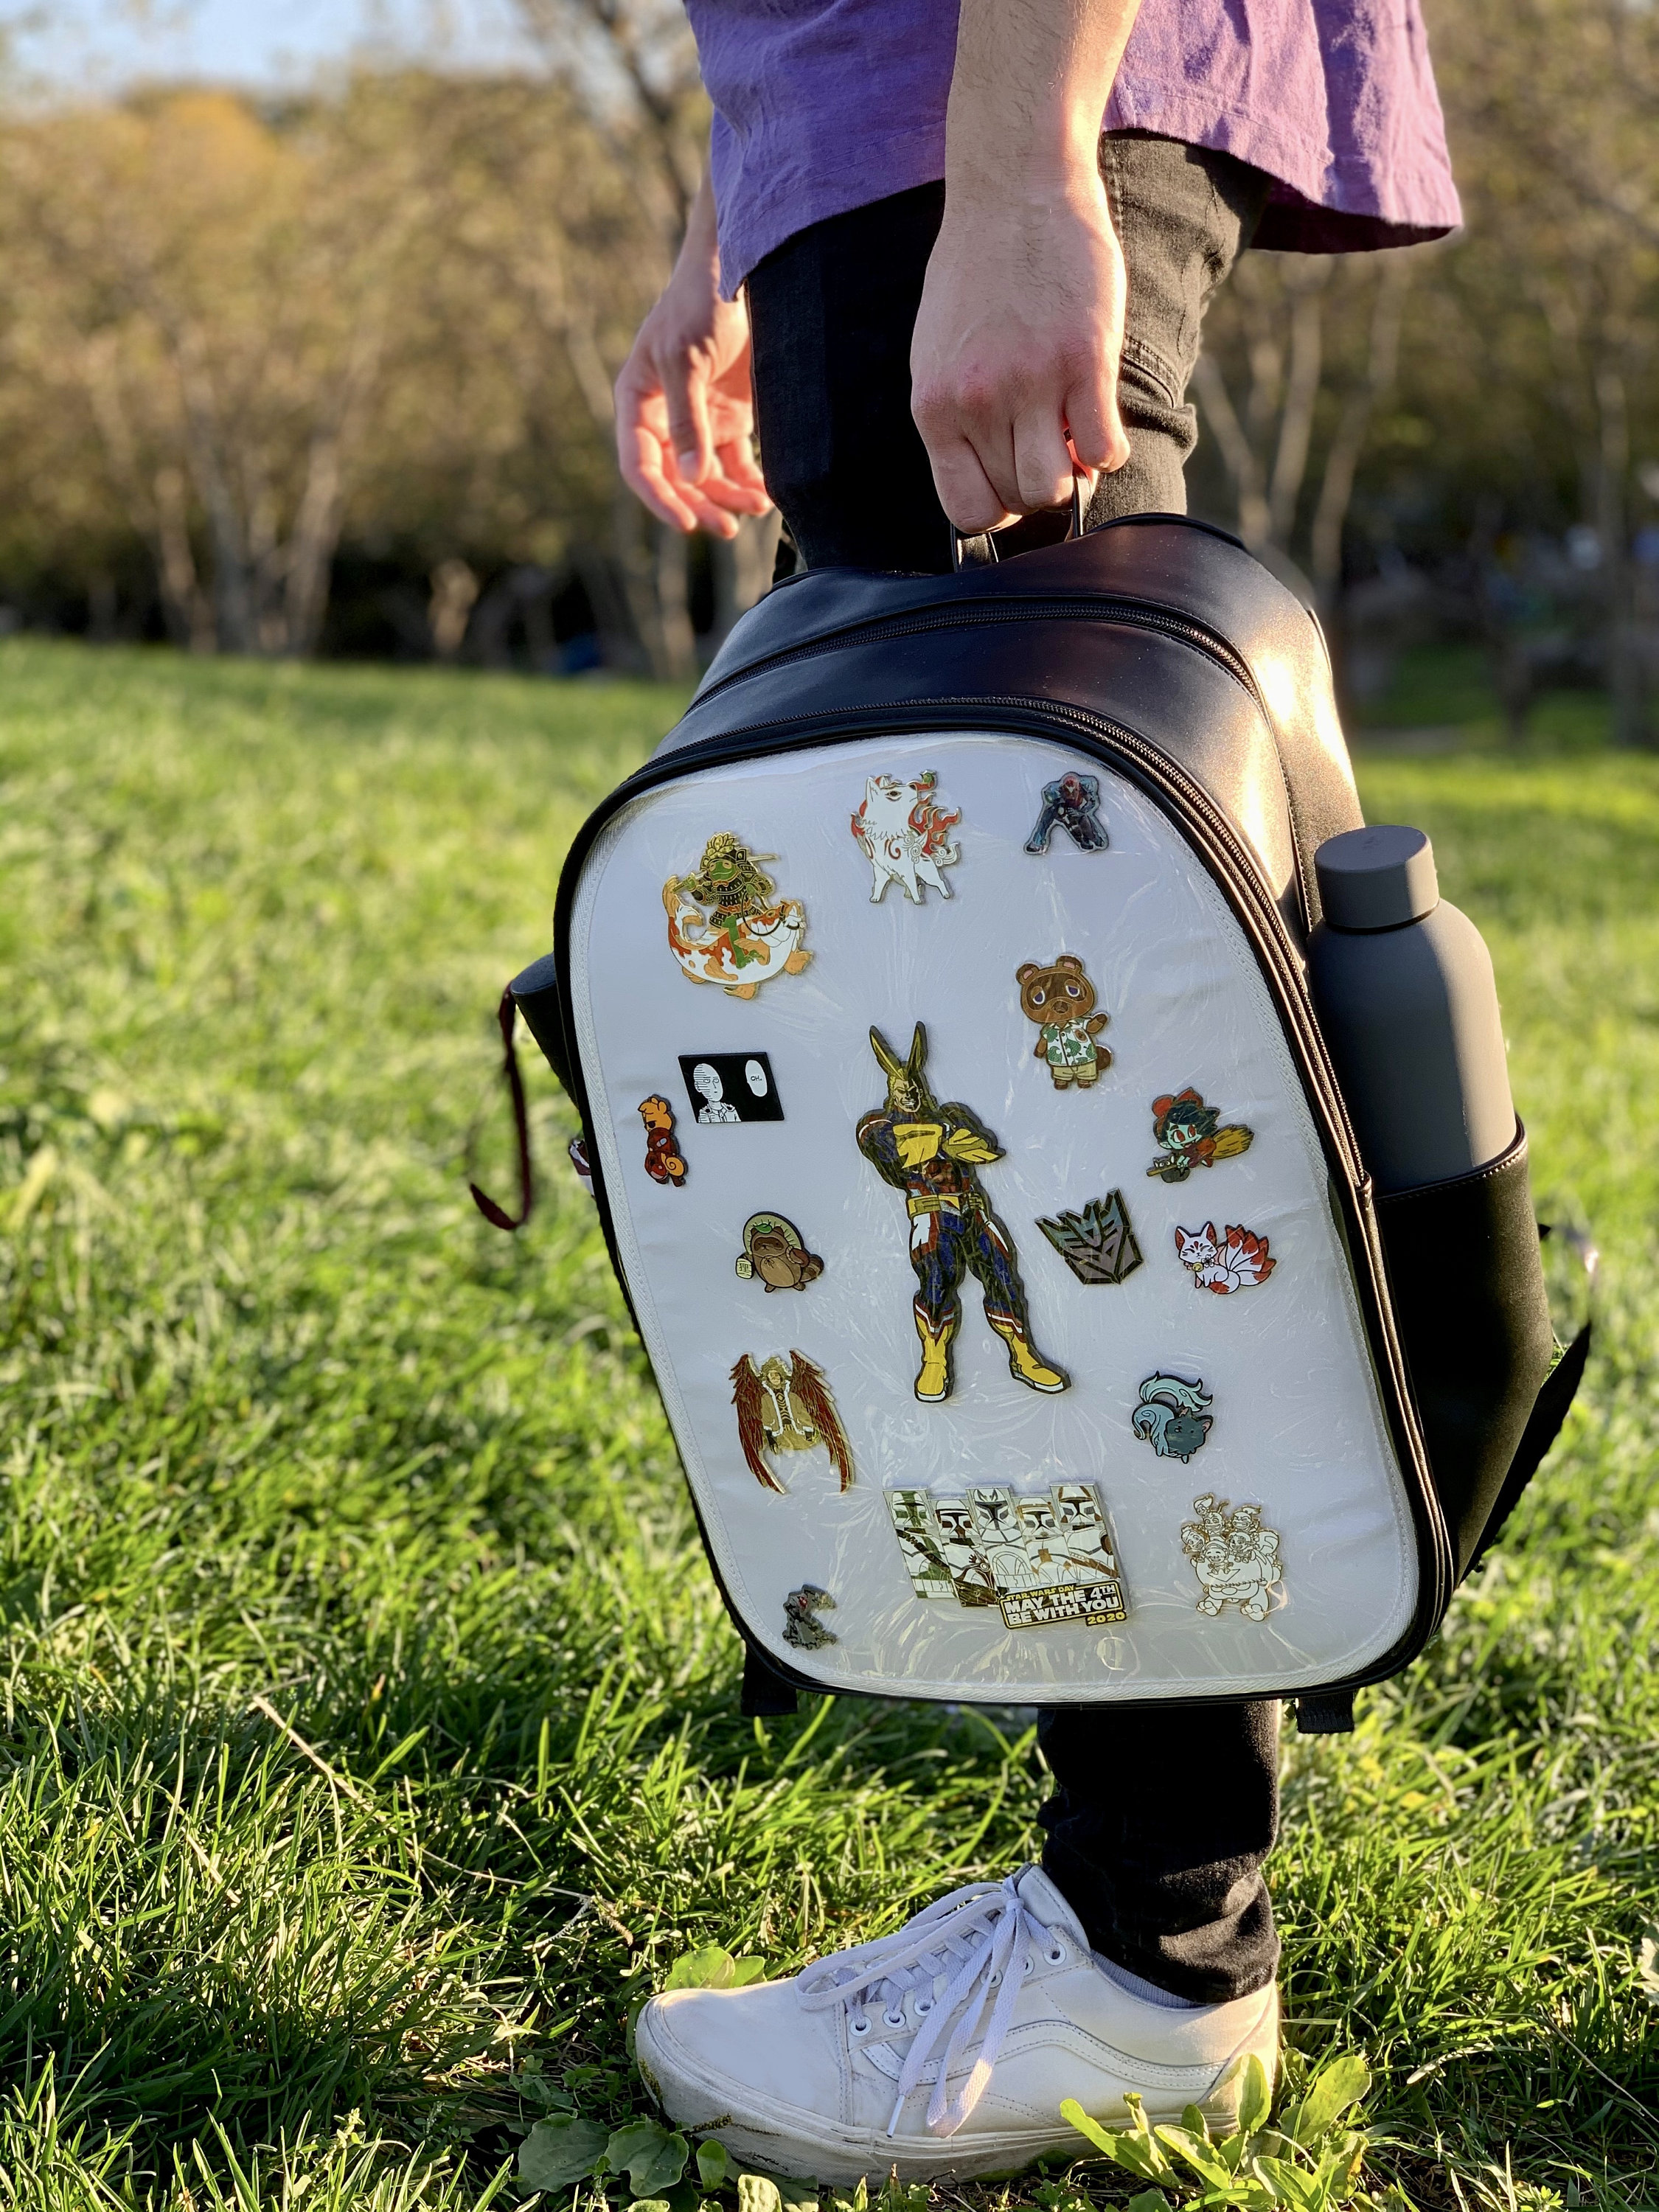 Pin on Handbags, purses & backpacks